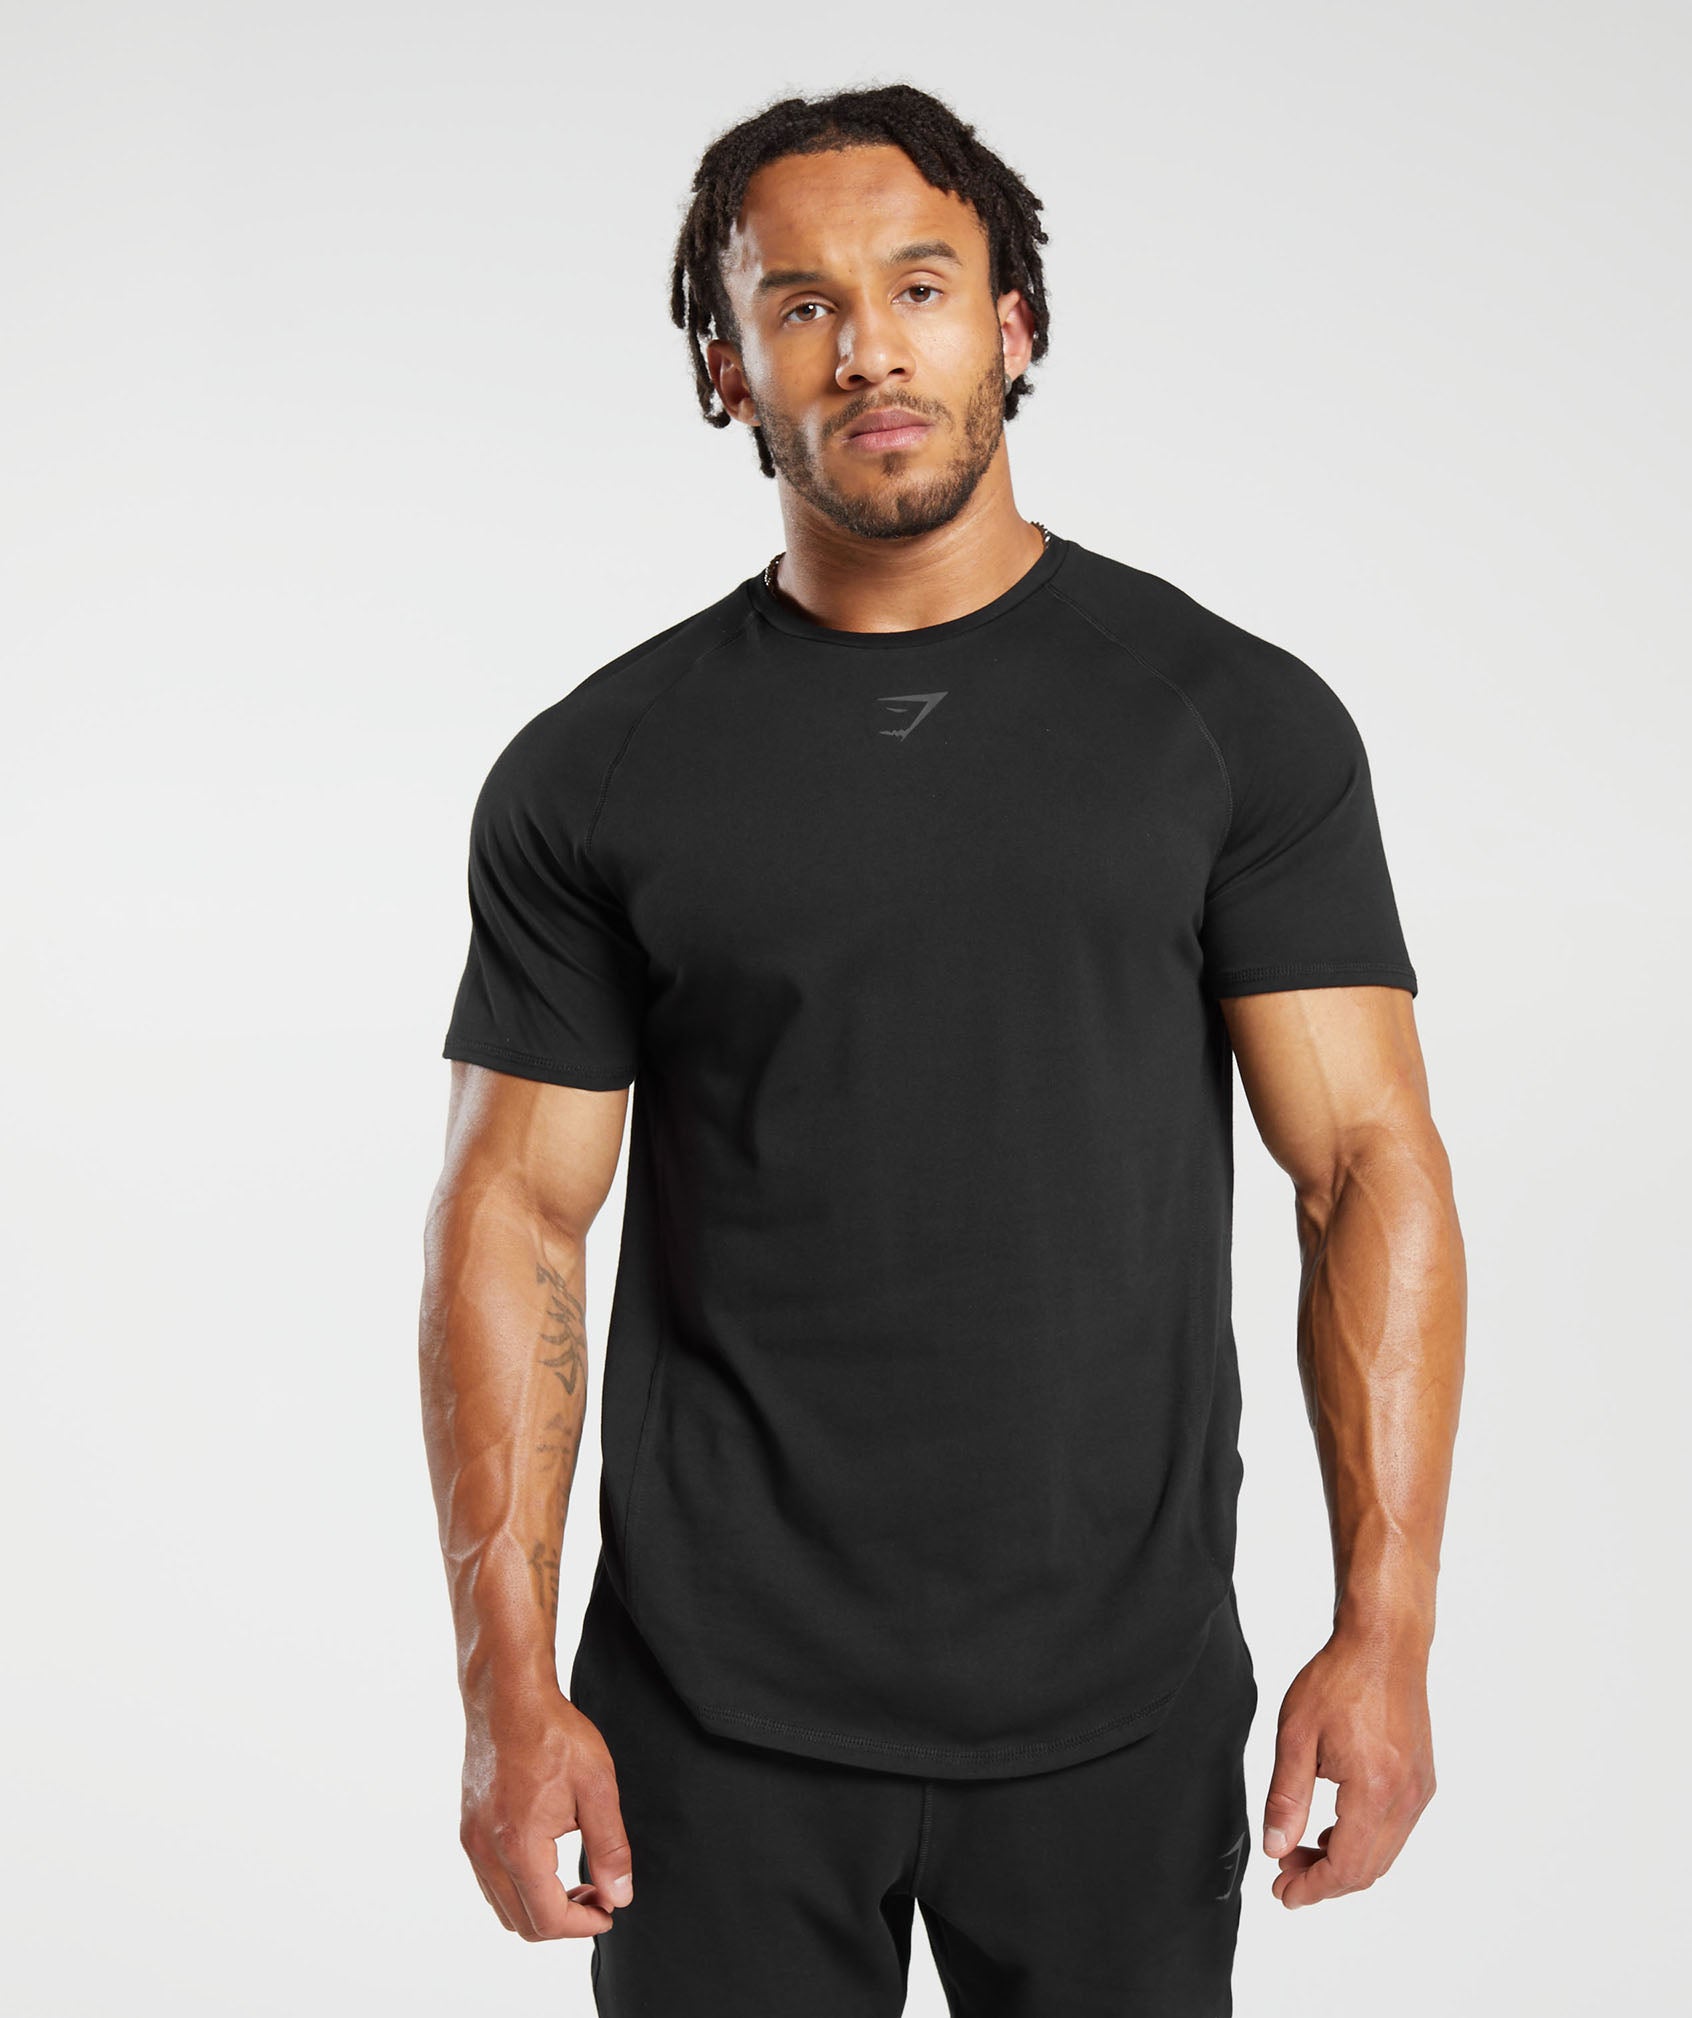 T-shirt violet manches courtes homme - Tshirt Fitness Homme - Teeshirt  manches courtes - Vêtements de sport Tibo Inshape